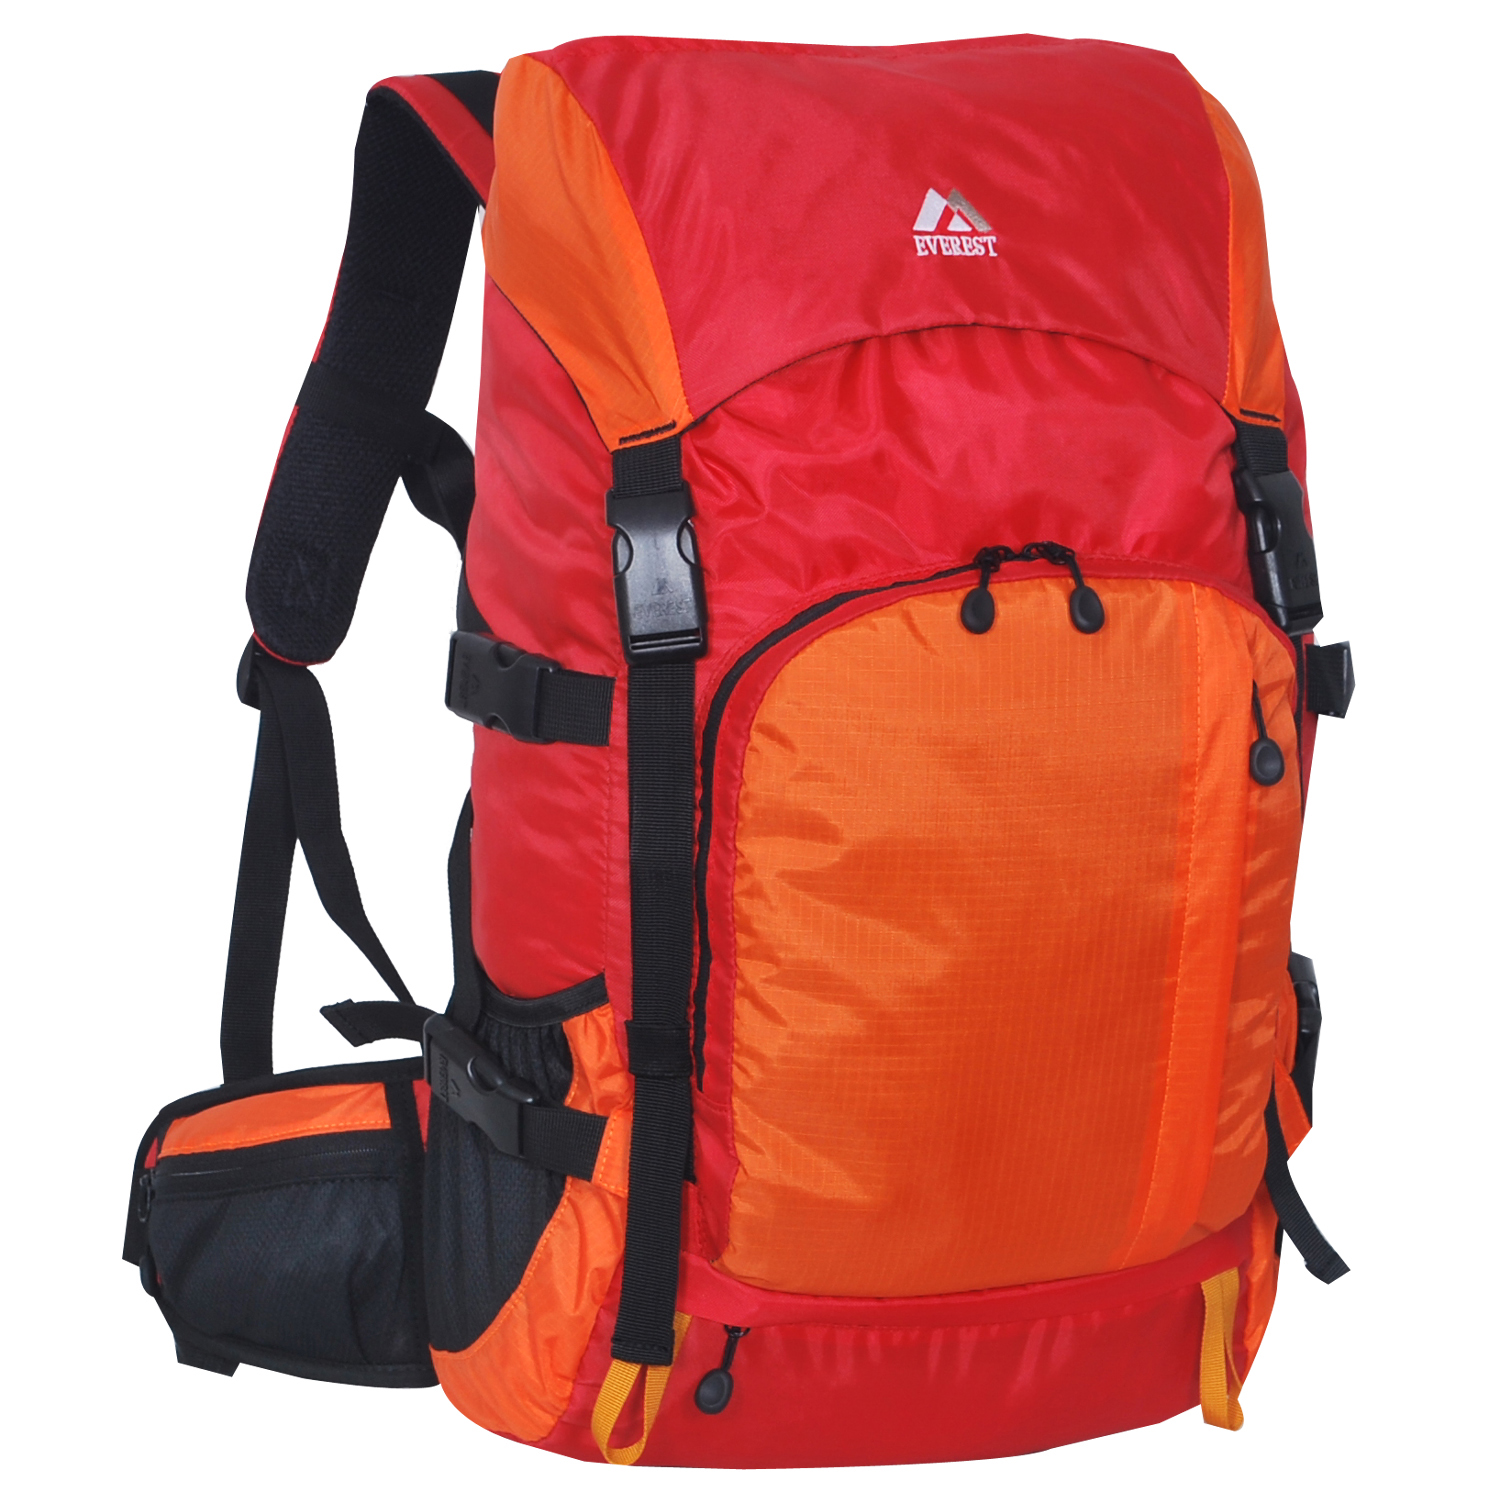 Everest Unisex Weekender Hiking Pack Red Orange - image 1 of 7